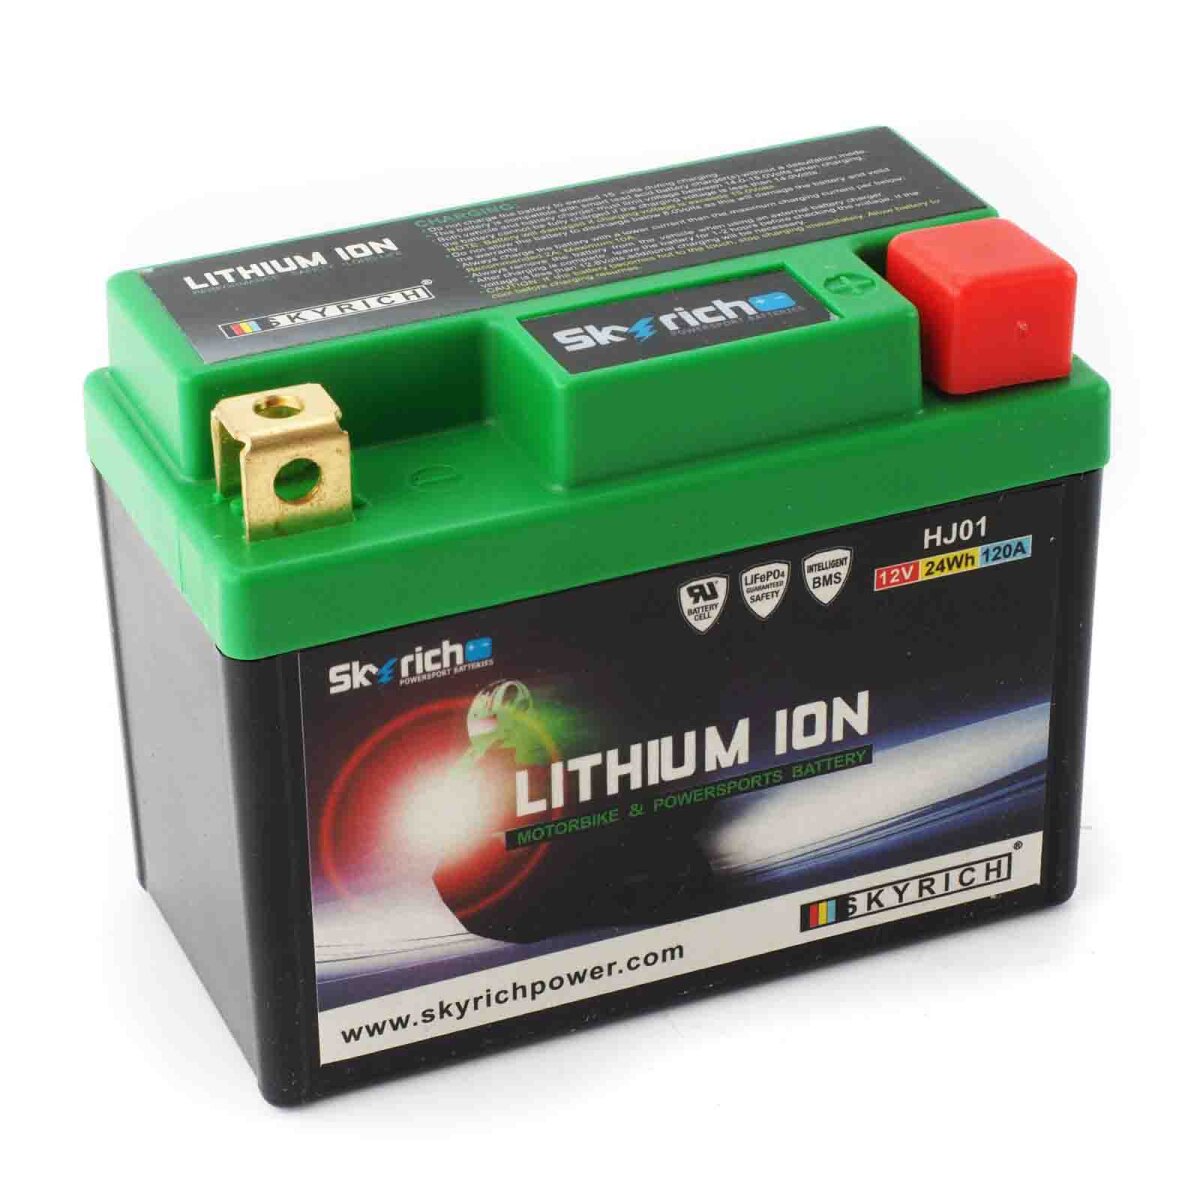 SKYRICH - Batterie Moto 12V Lithium Ion HJ01 - 107x56x85